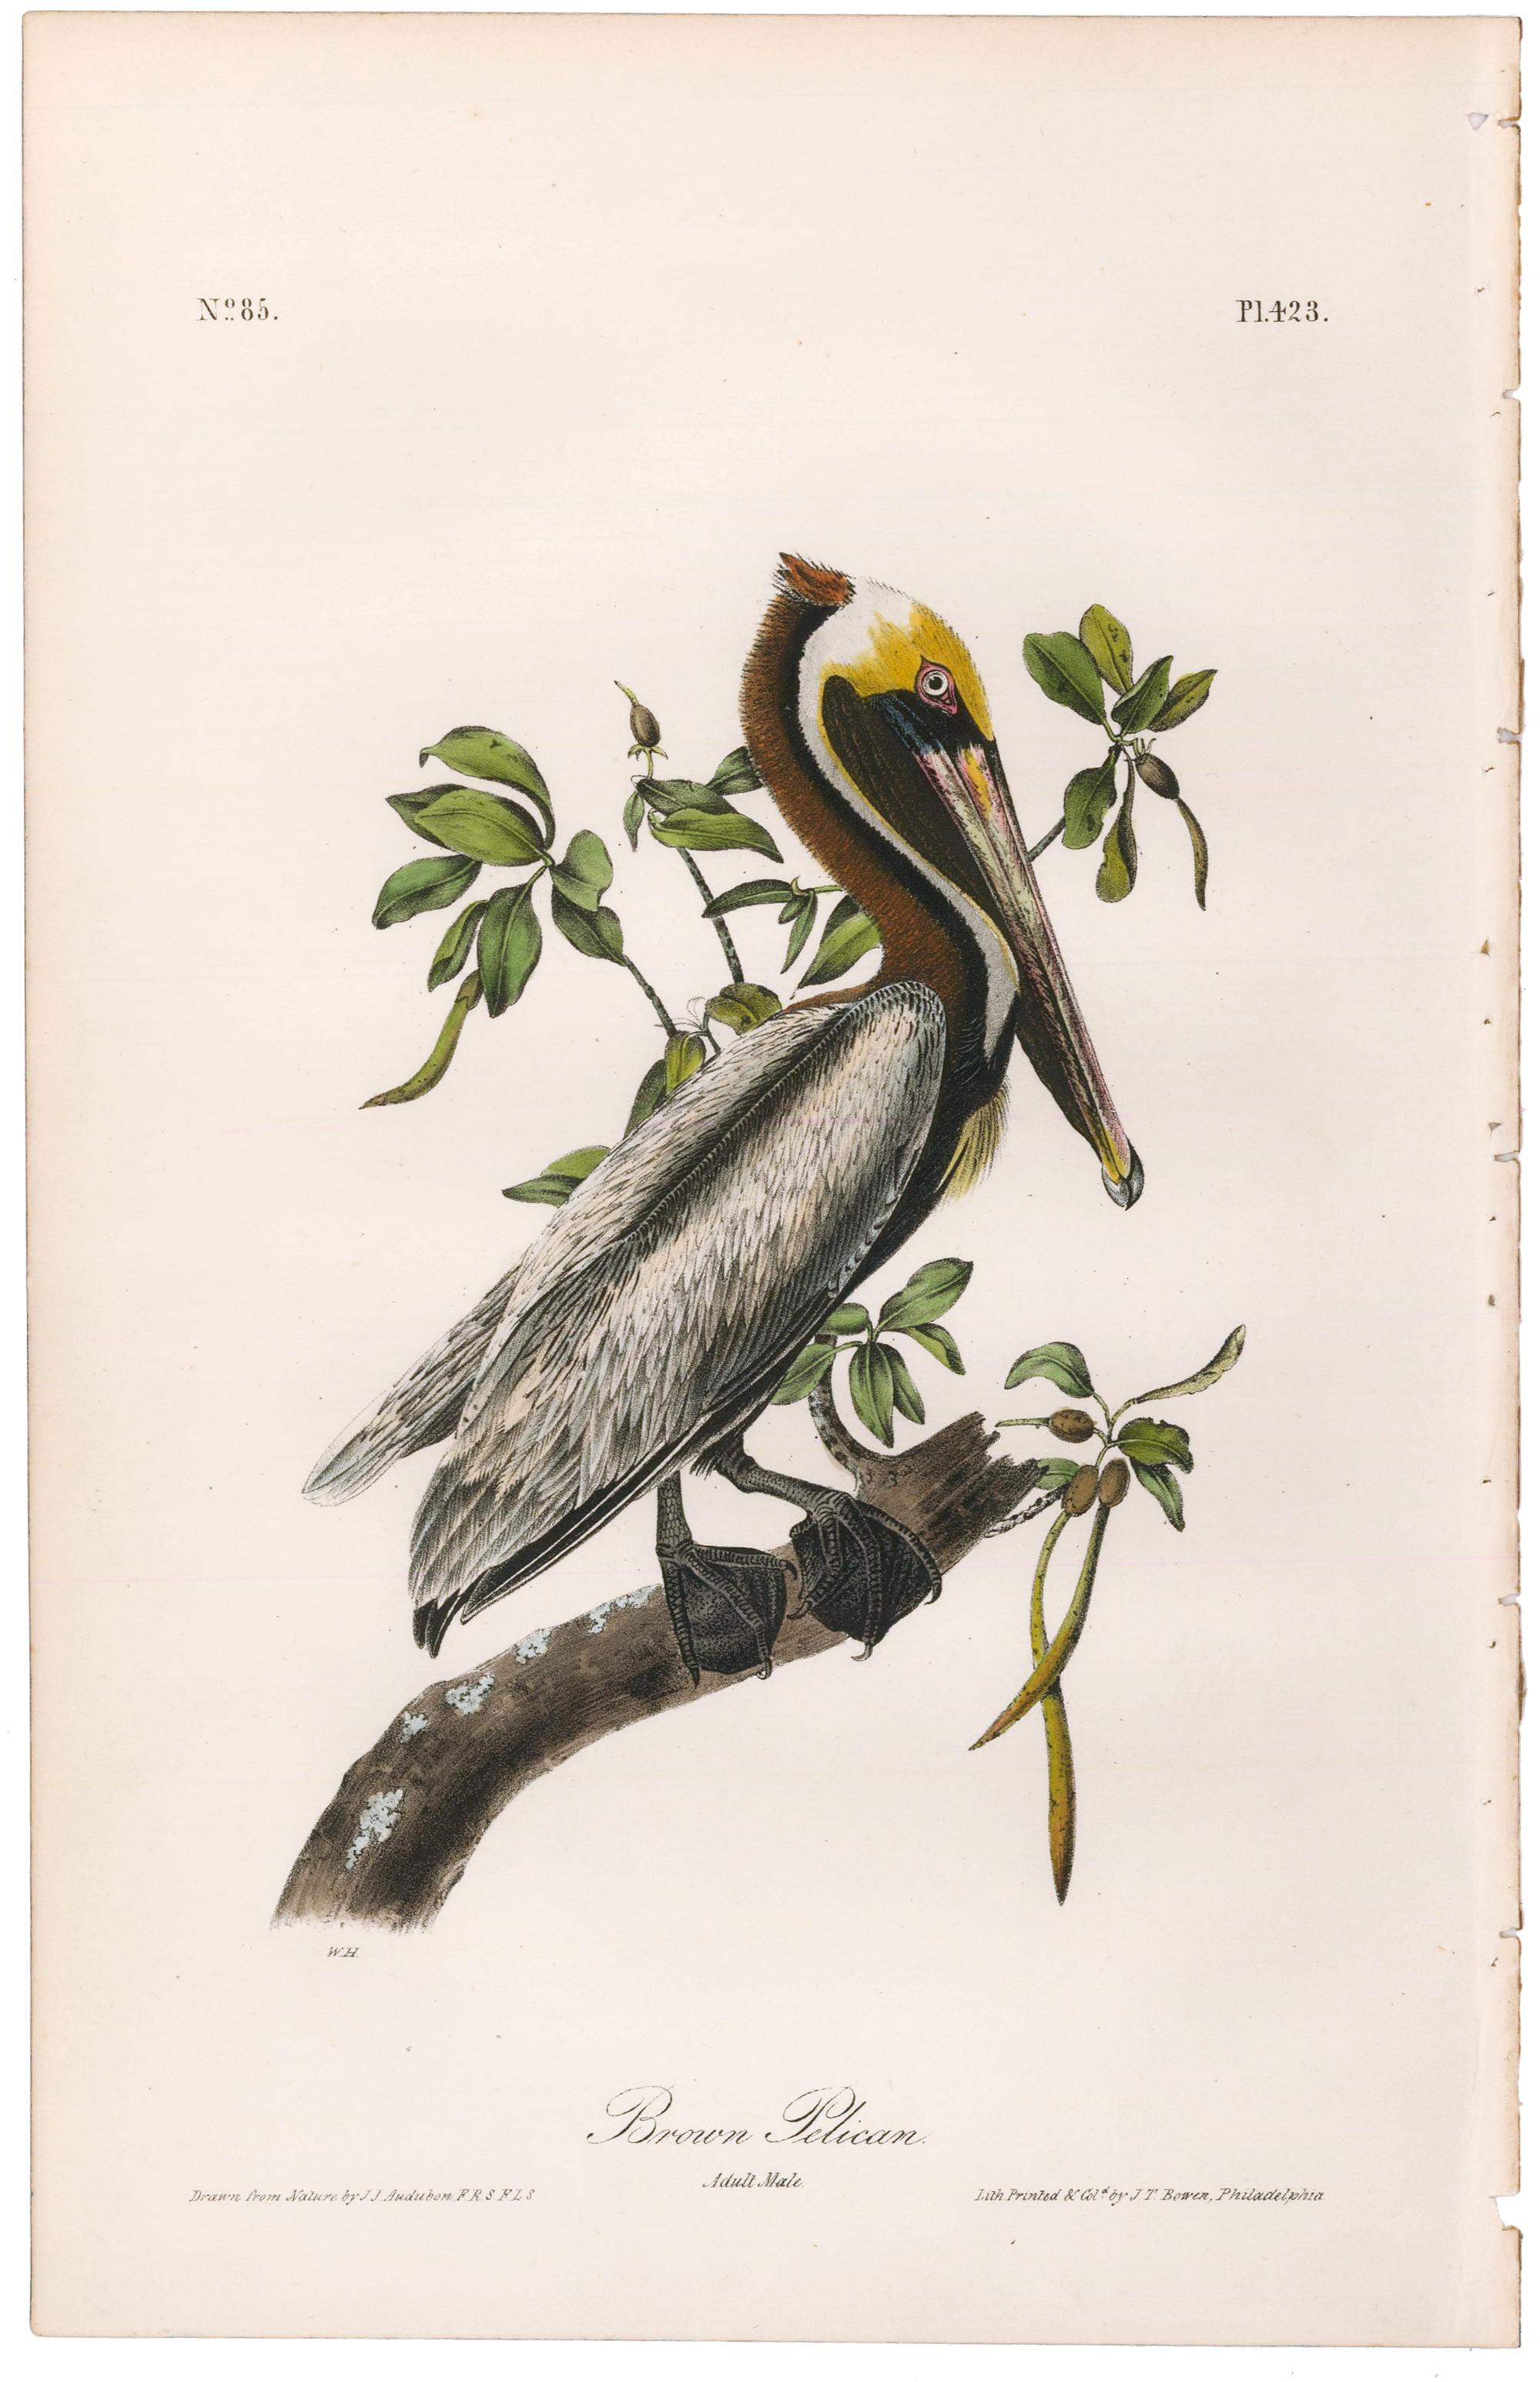 Pélican brun. - Print de John James Audubon